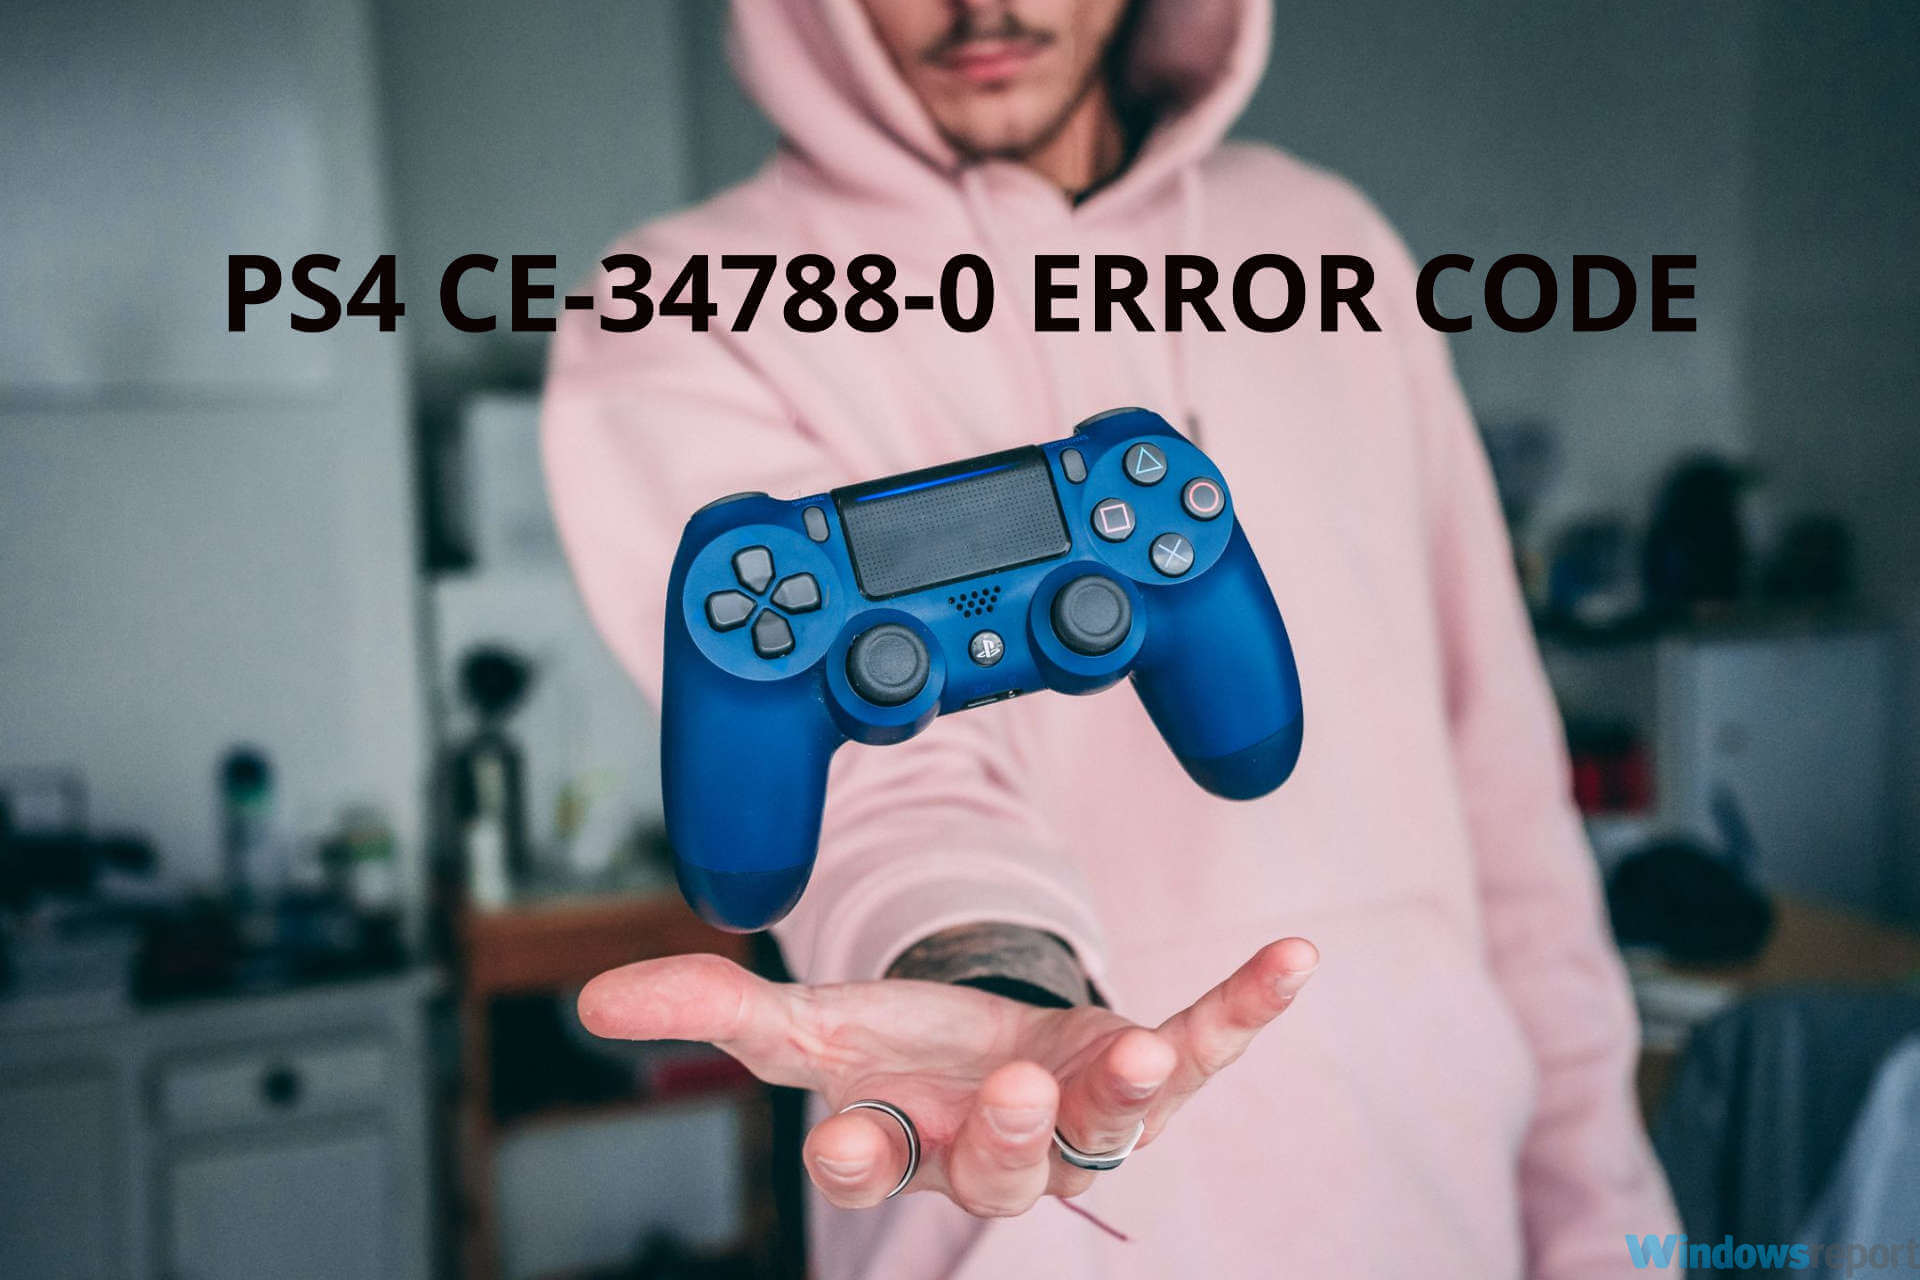 Fix the CE-34788-0 PS4 error code